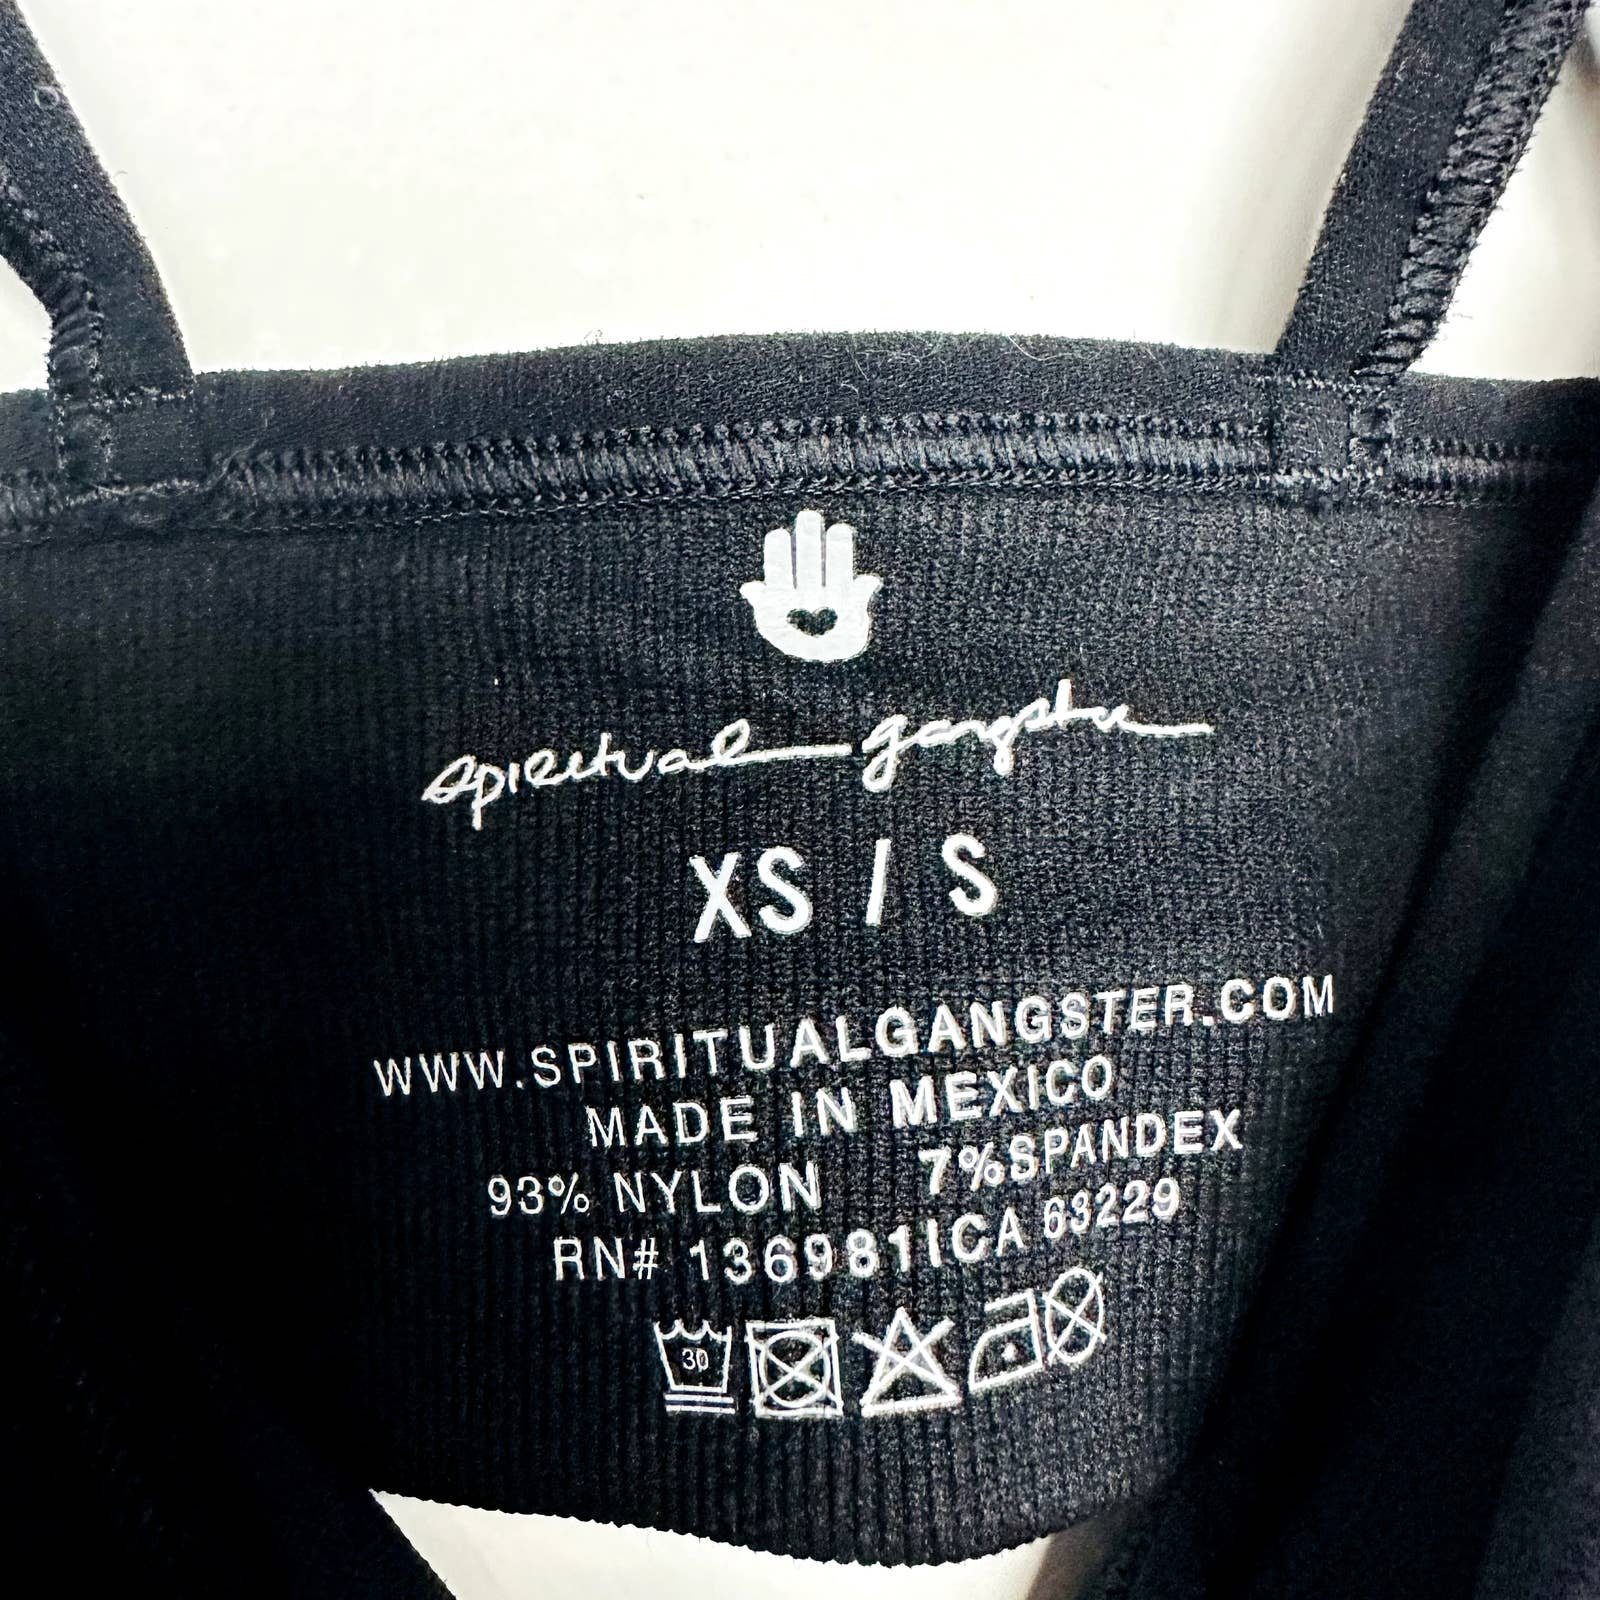 Spiritual Gangster NWT Criss Cross Strappy Activewear Sports Bra Black Size XS/S